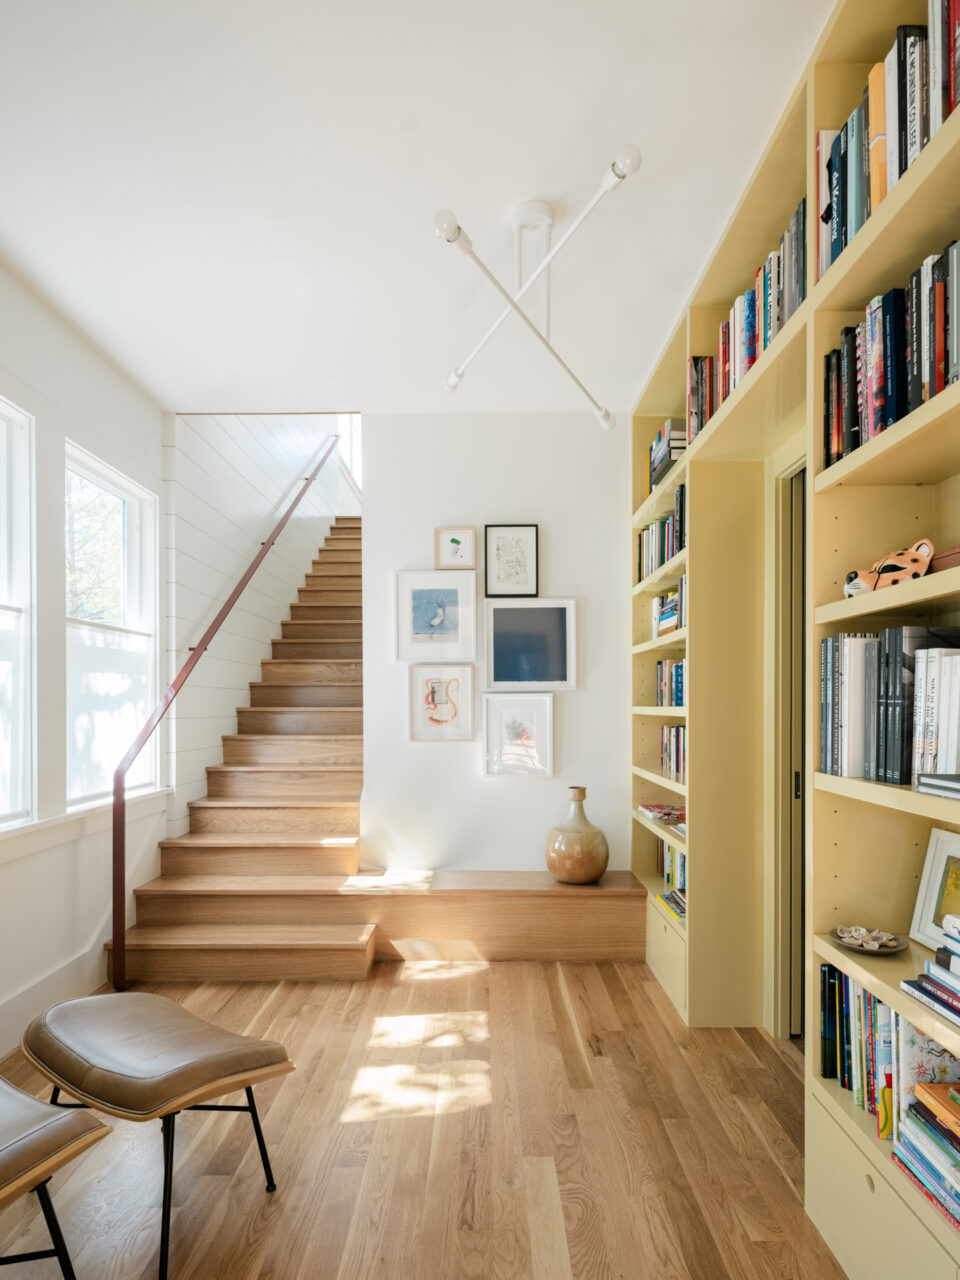 bookshelf and staircase